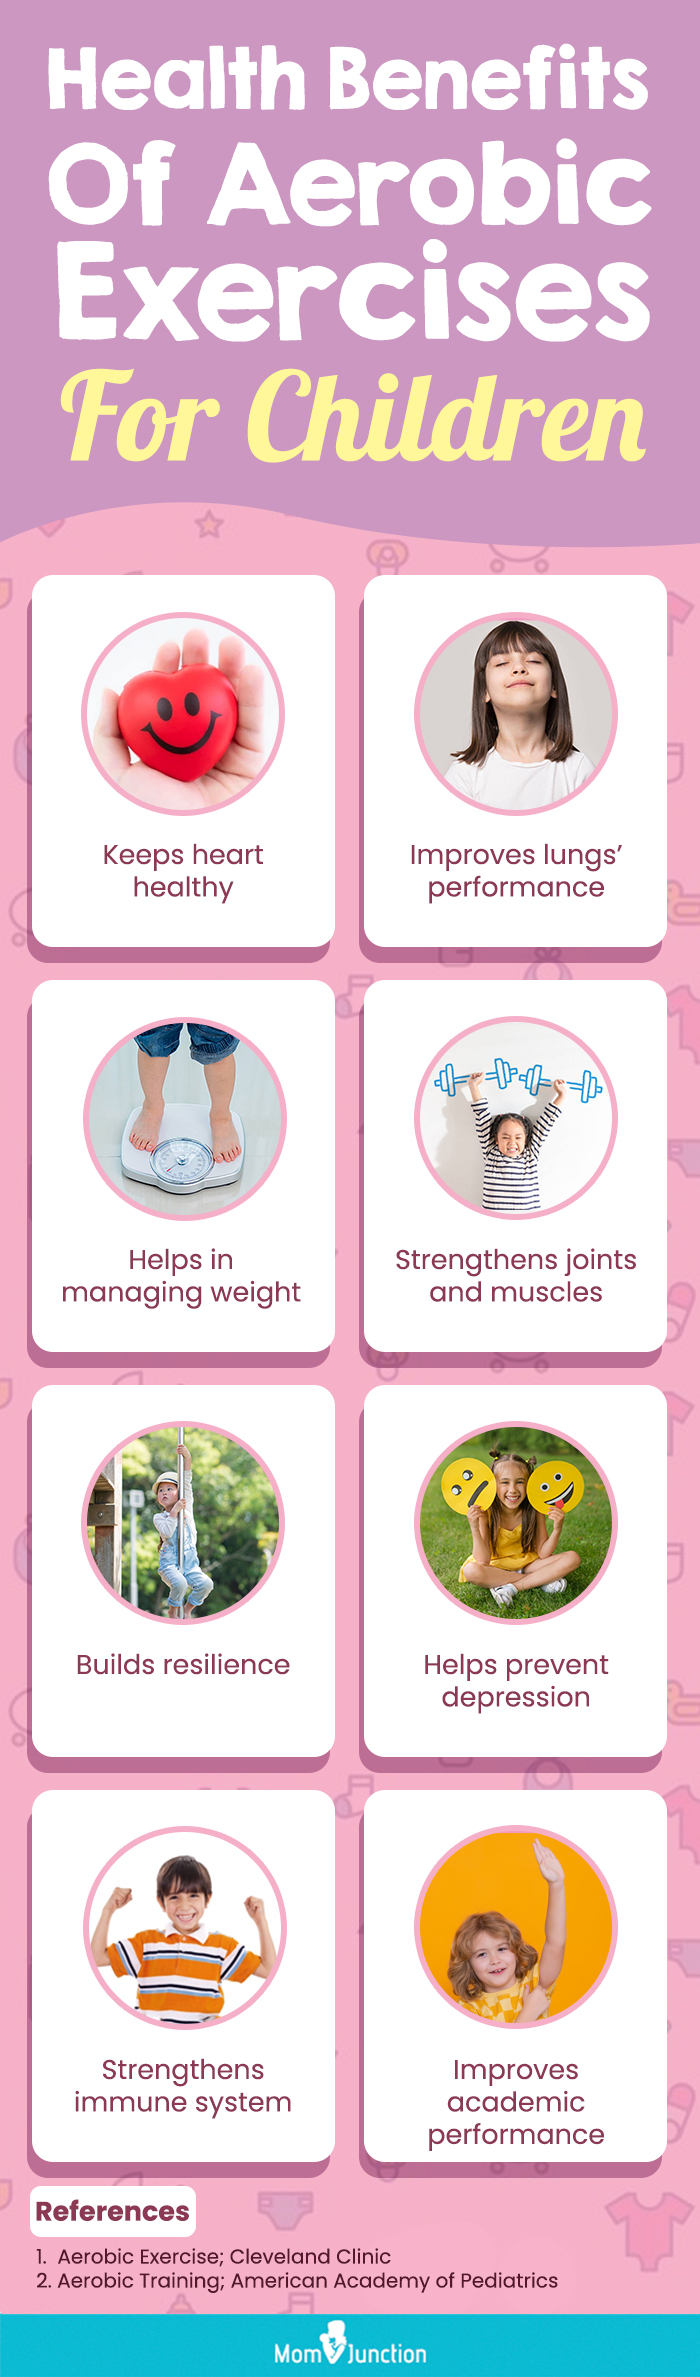 Top 5 Exercises for Juvenile Arthritis - Benefits of Aerobic Exercises